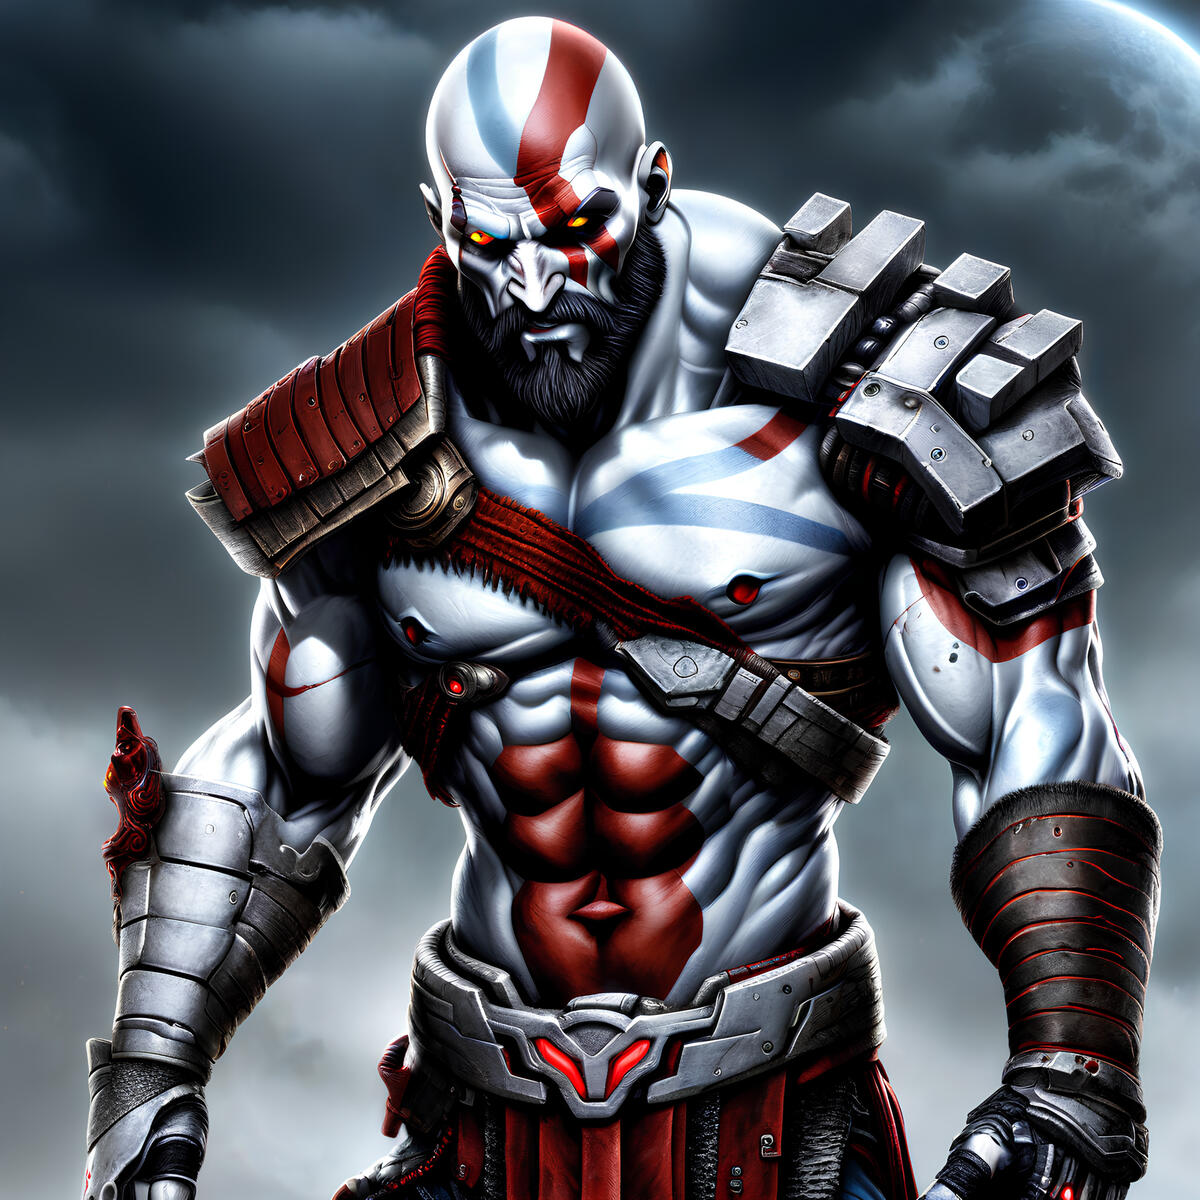 Kratos the cyborg